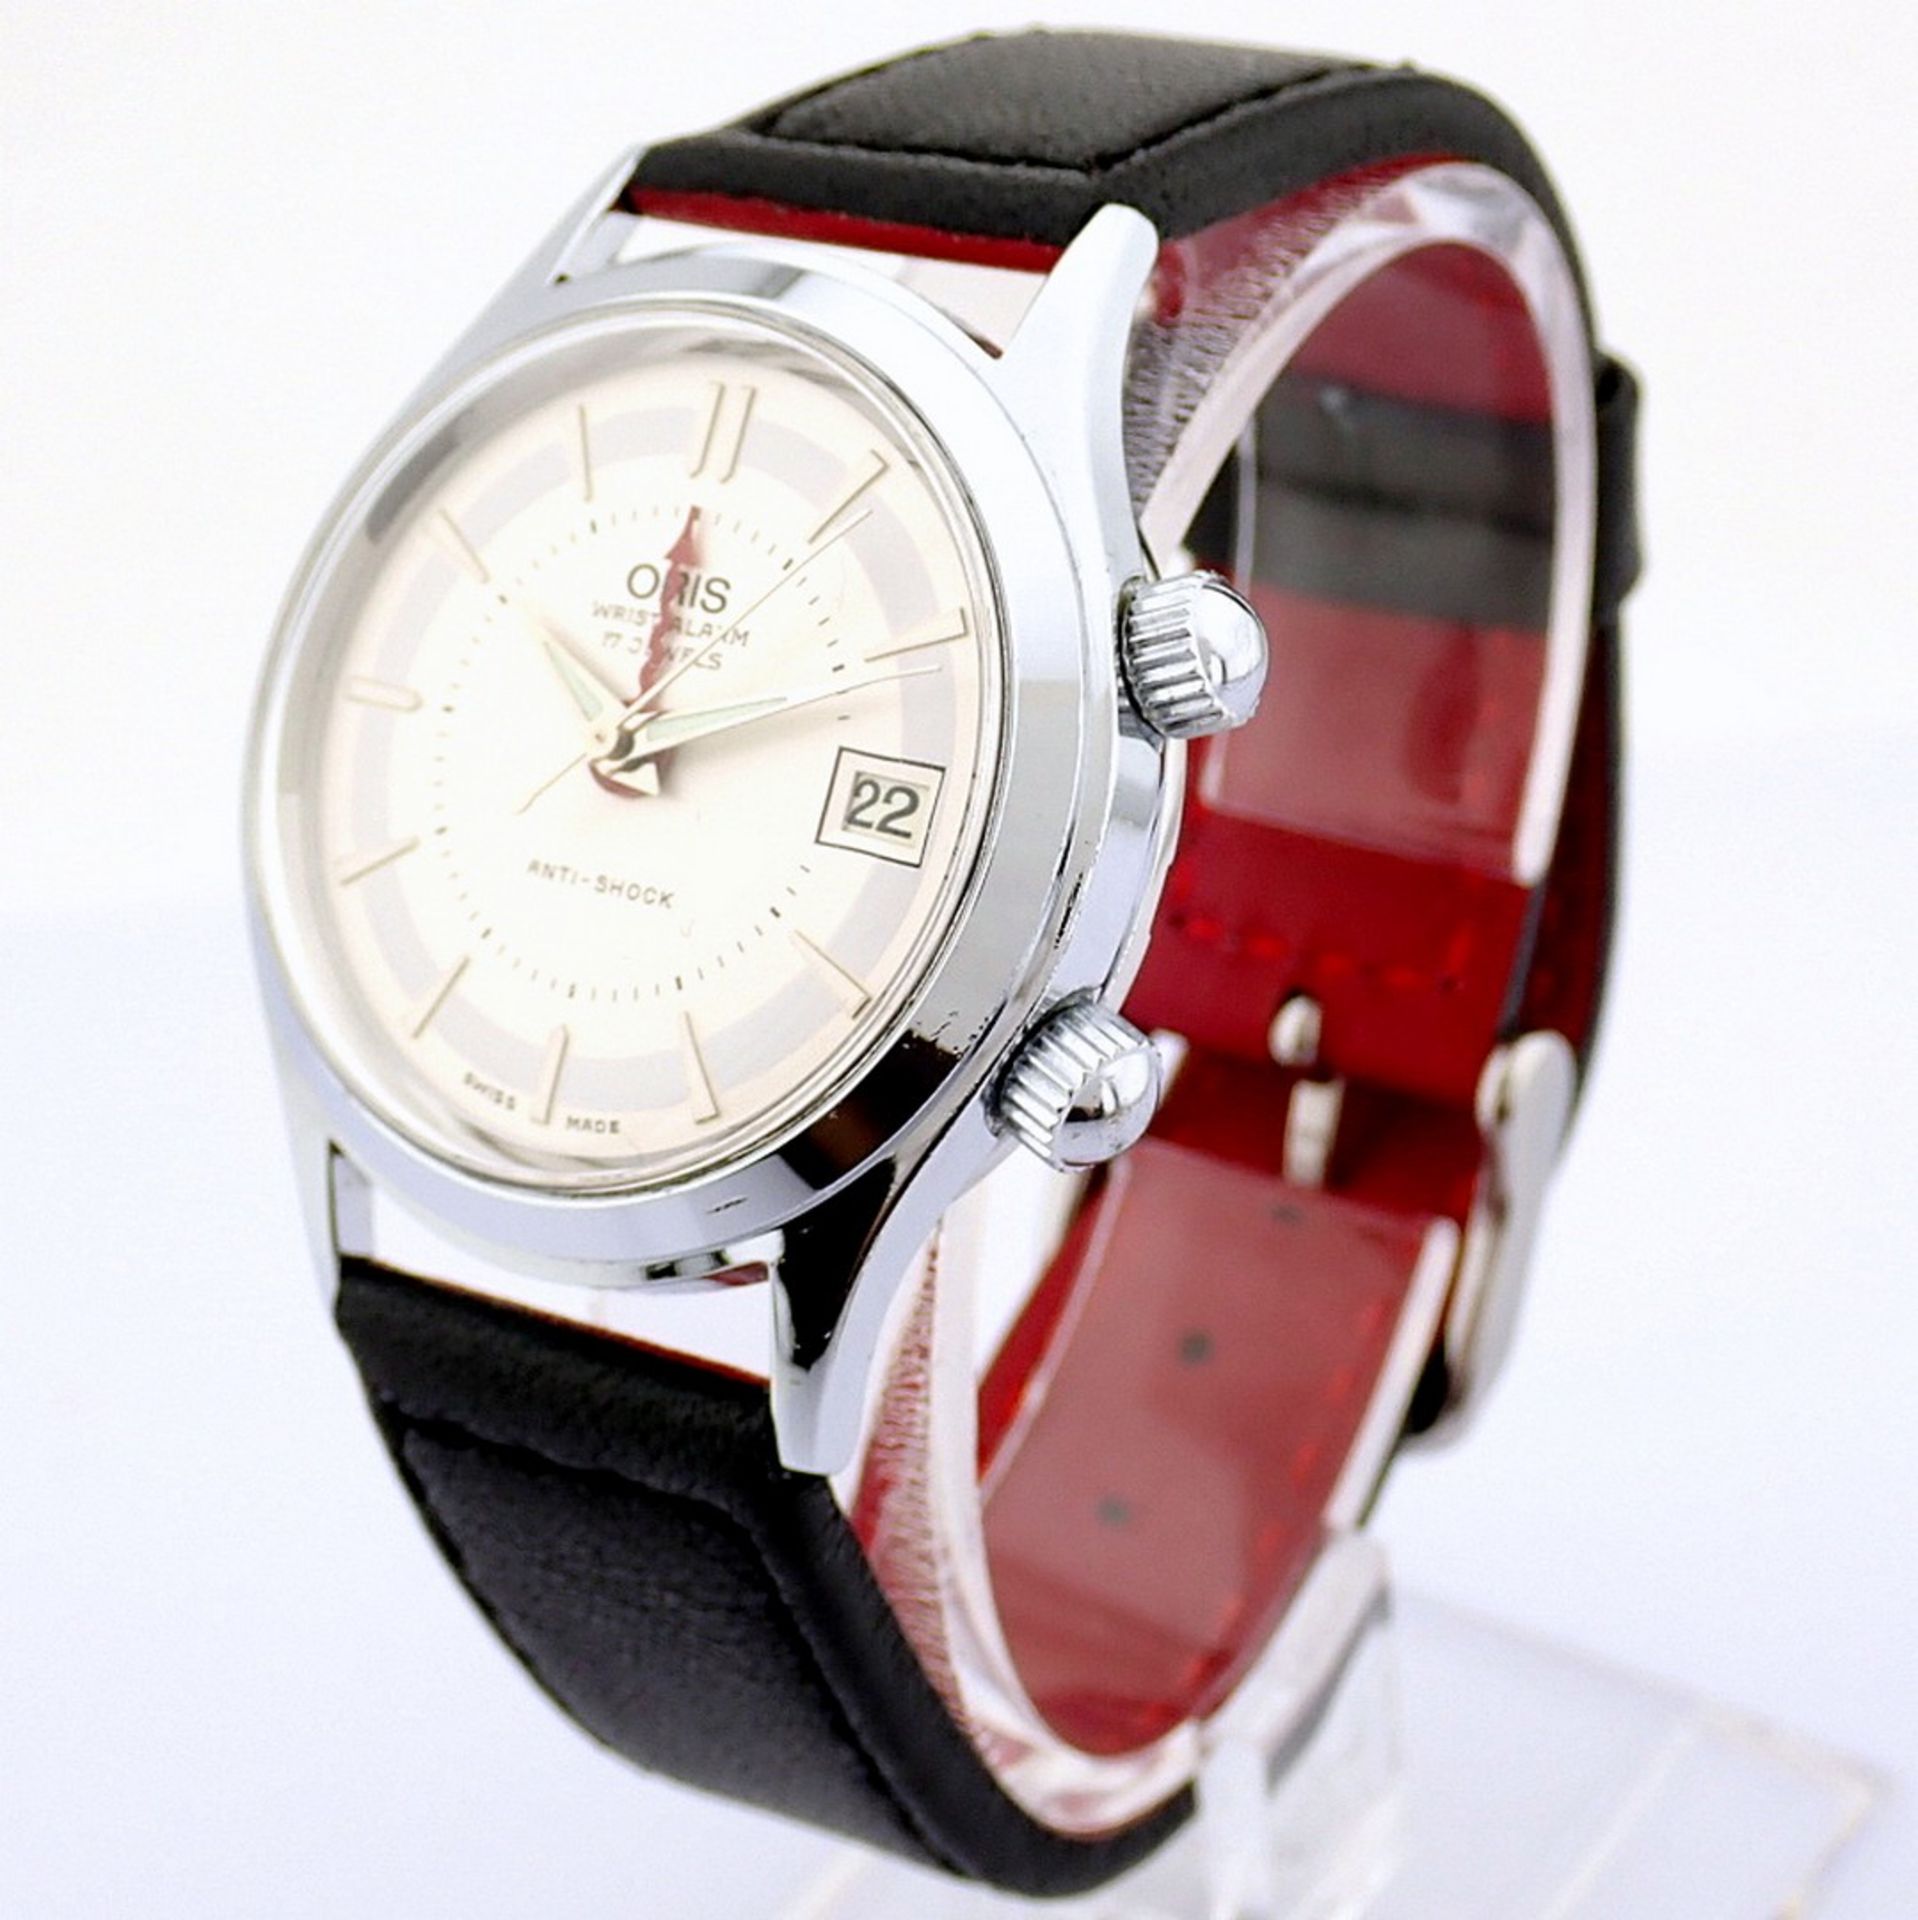 Oris / Wirstalarm 17 Jewels Anti-Shock - Gentlemen's Steel Wristwatch - Image 5 of 10